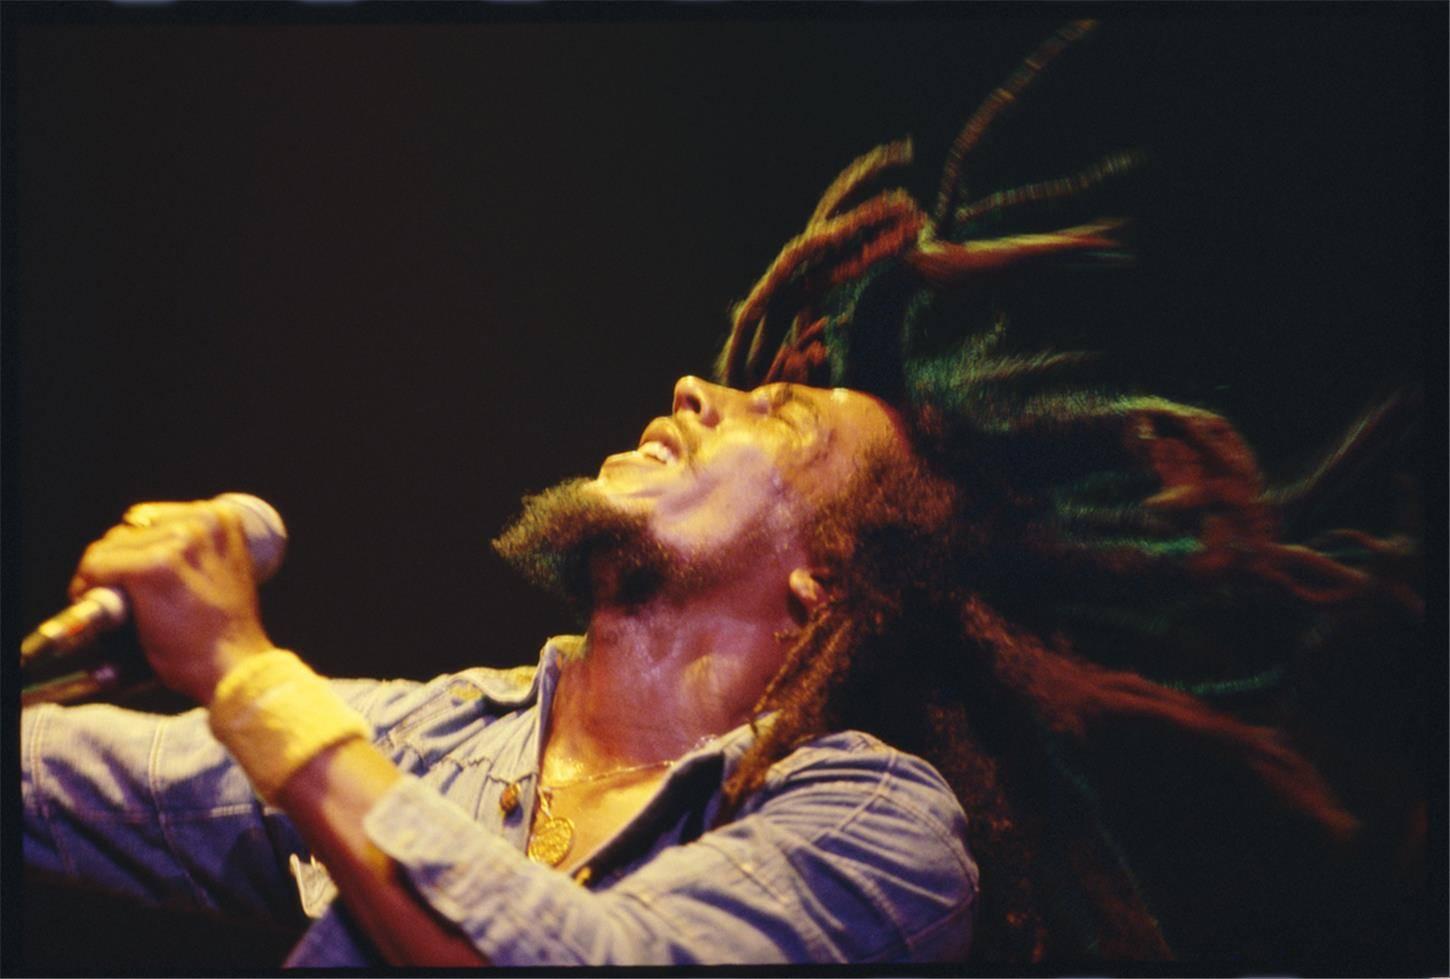 Steve Joester Color Photograph - Bob Marley, "Flying Dreads, " Hammersmith Odeon, London, 1976